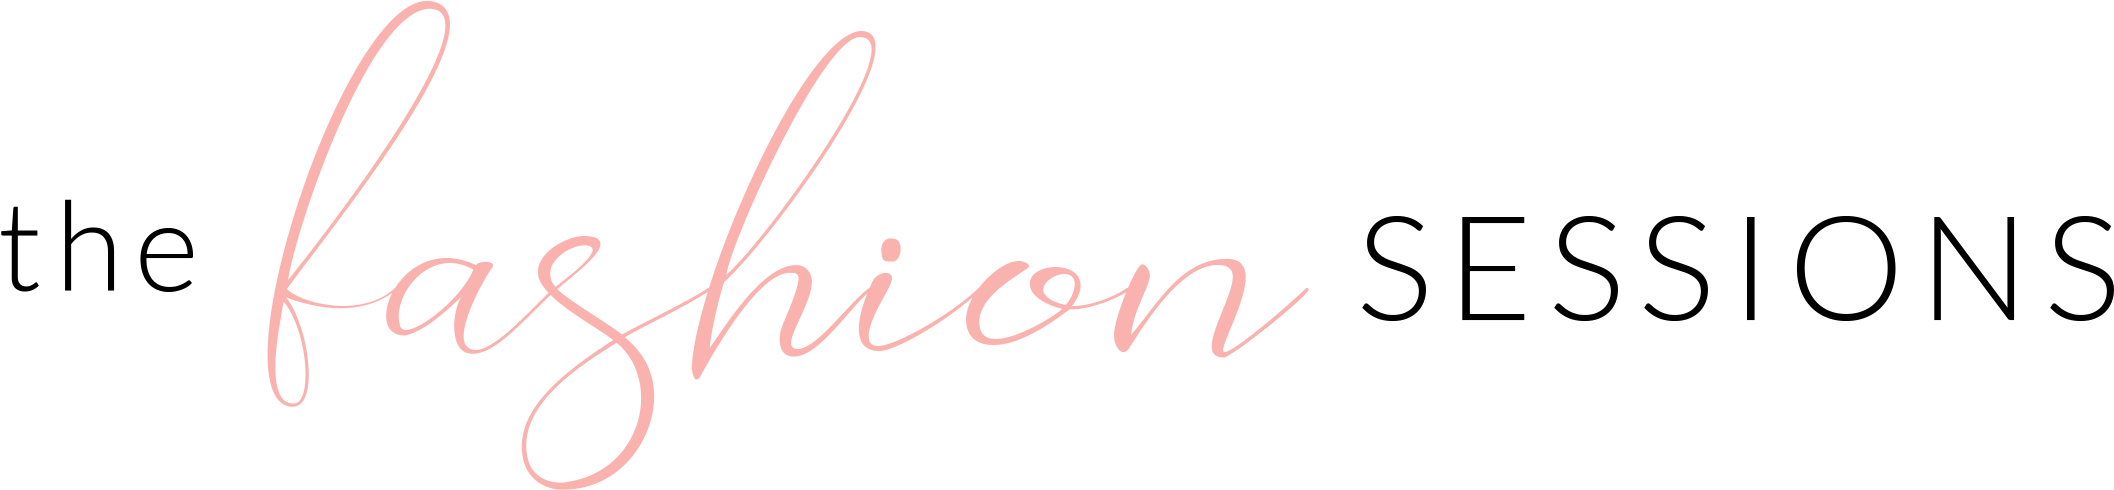 Fashion Sessions Logo PNG